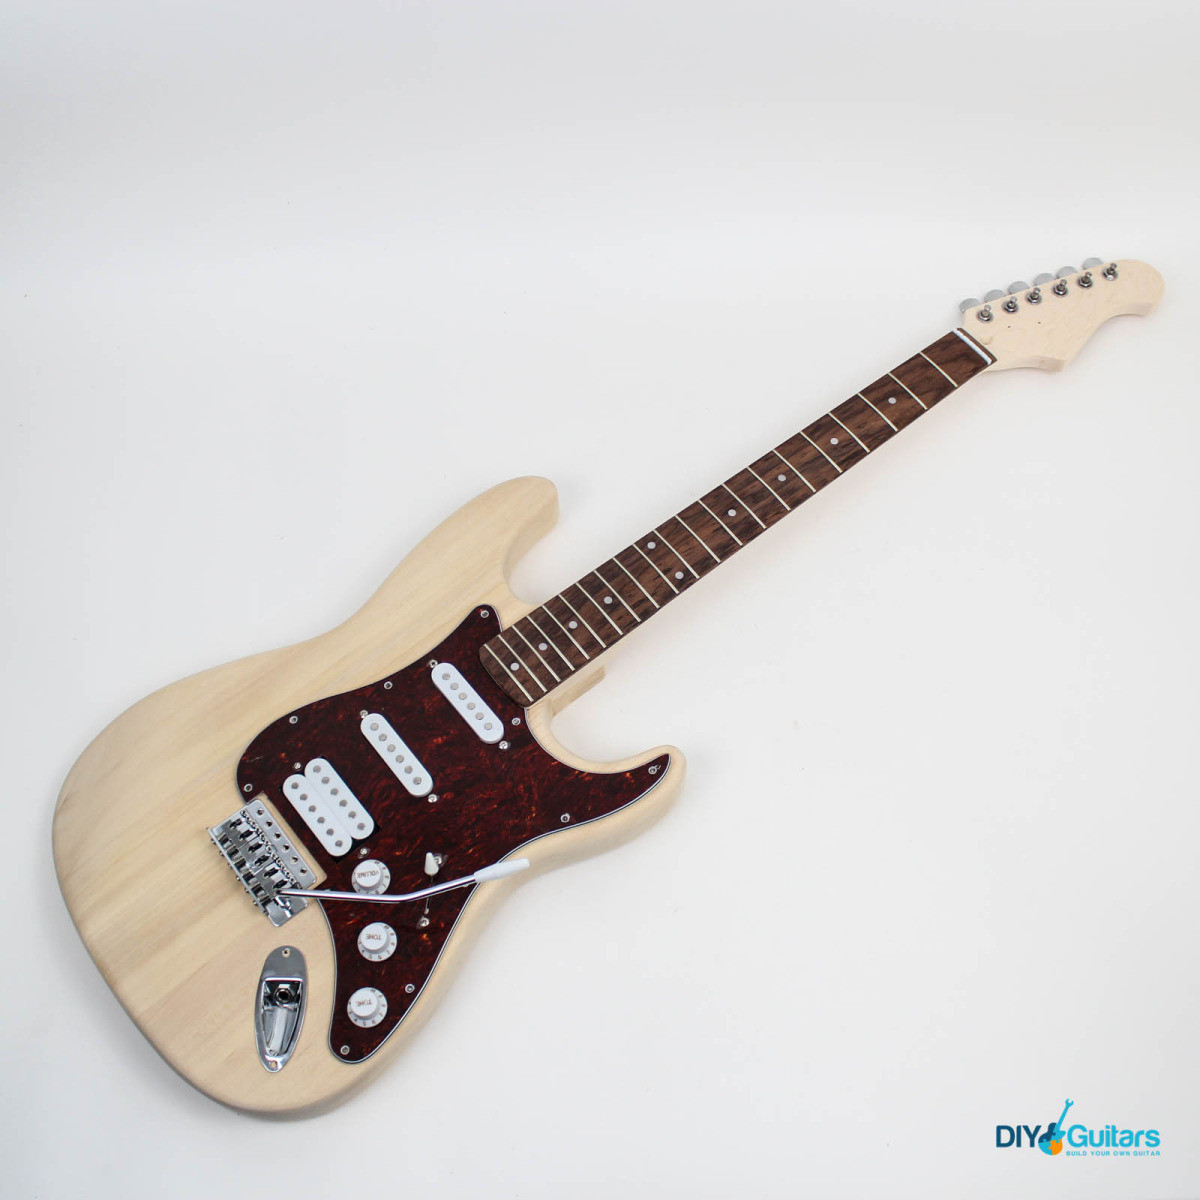 Diy Guitar
 Fender Stratocaster Style Guitar Kit DIY Guitars